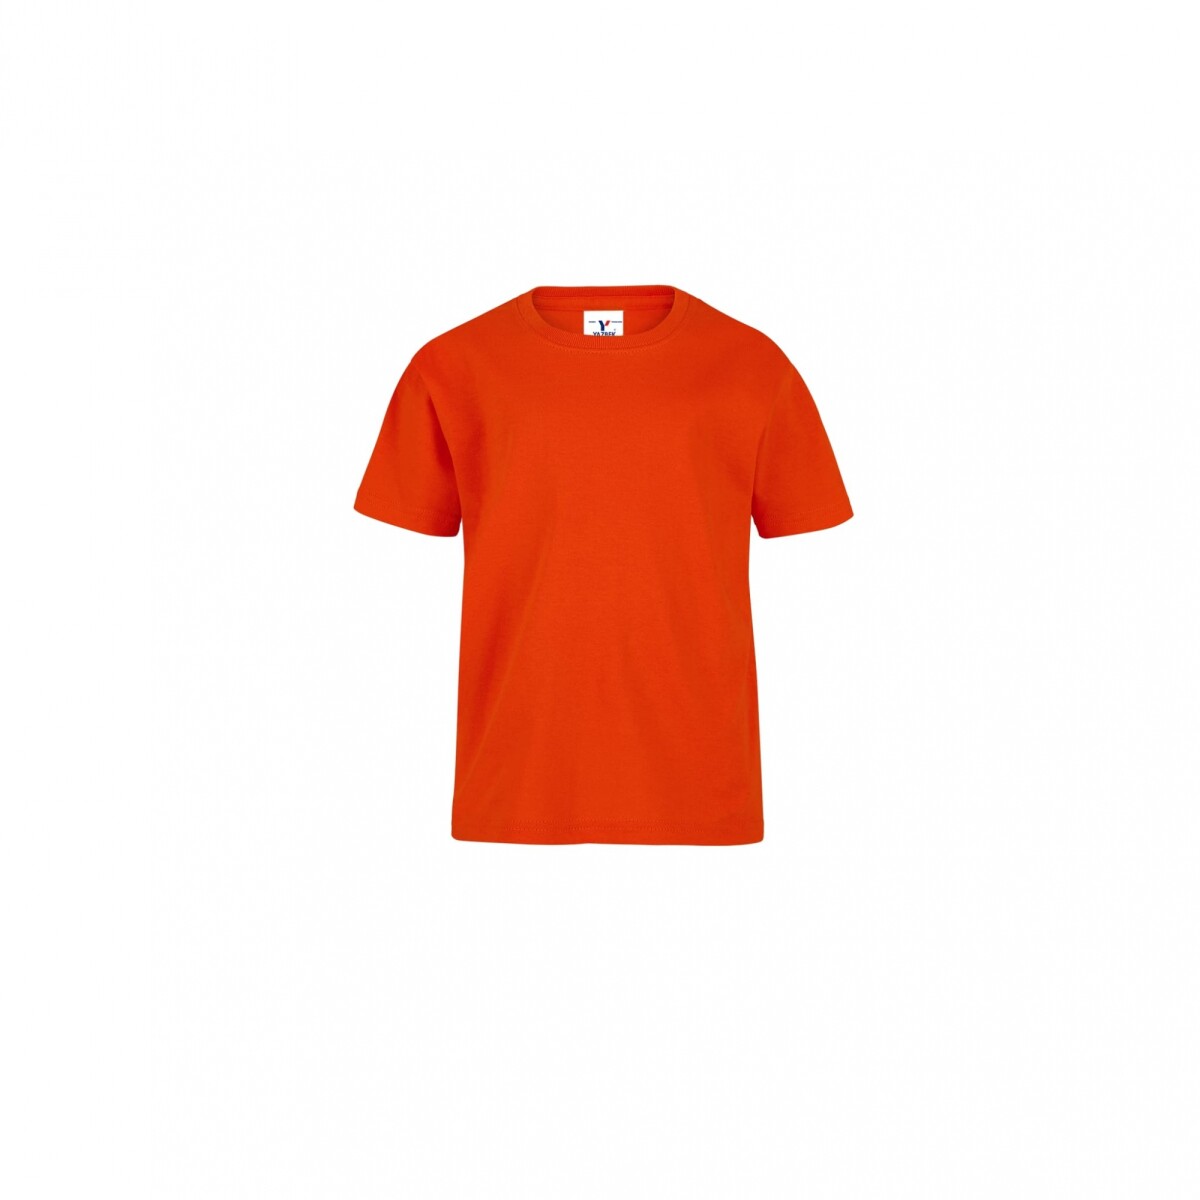 Camiseta a la base bebé - Naranja 